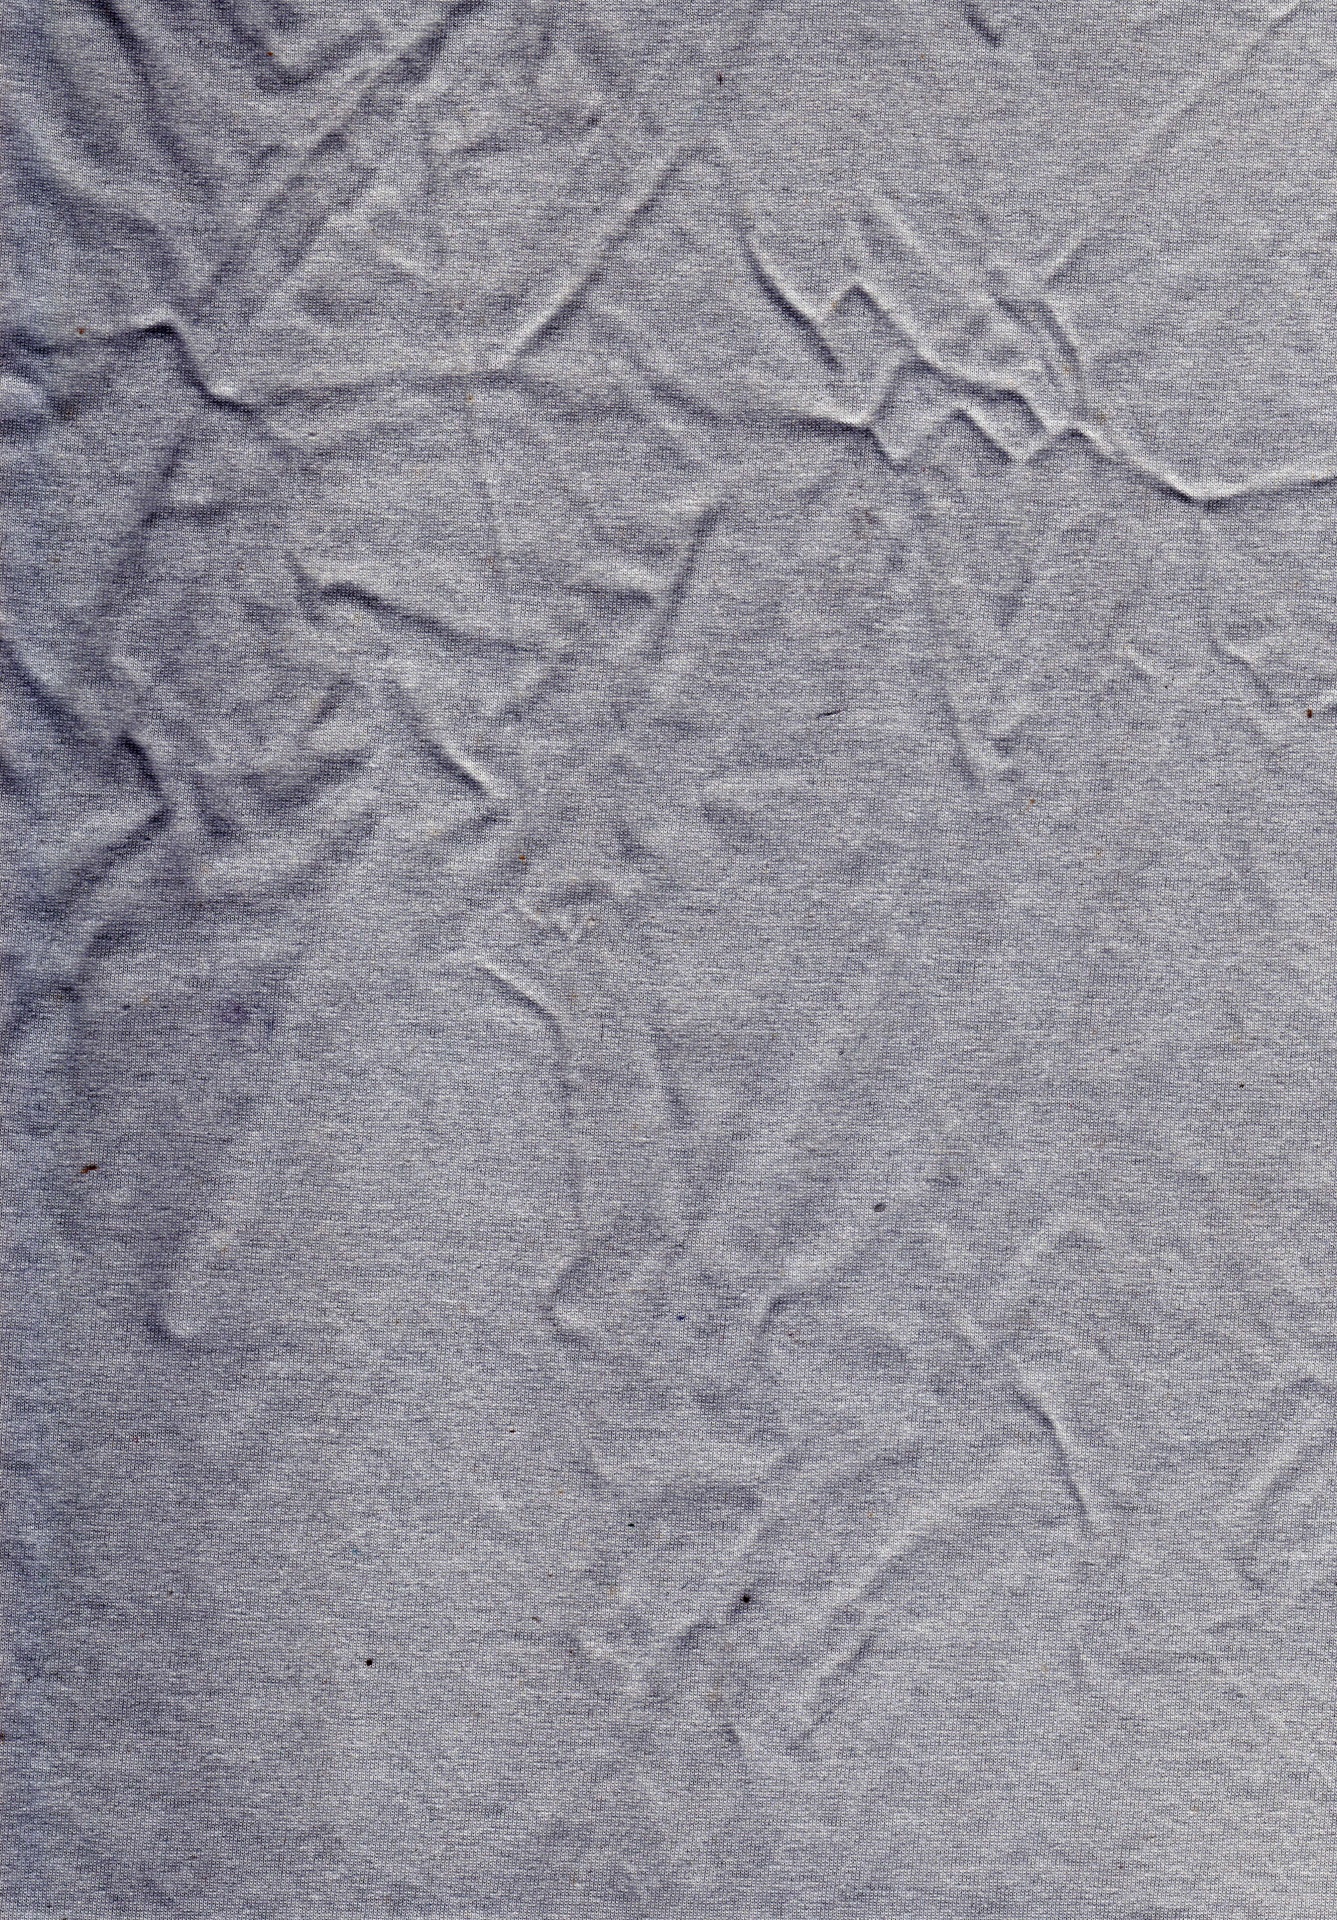 Close-upachtergrond van textieltextuur